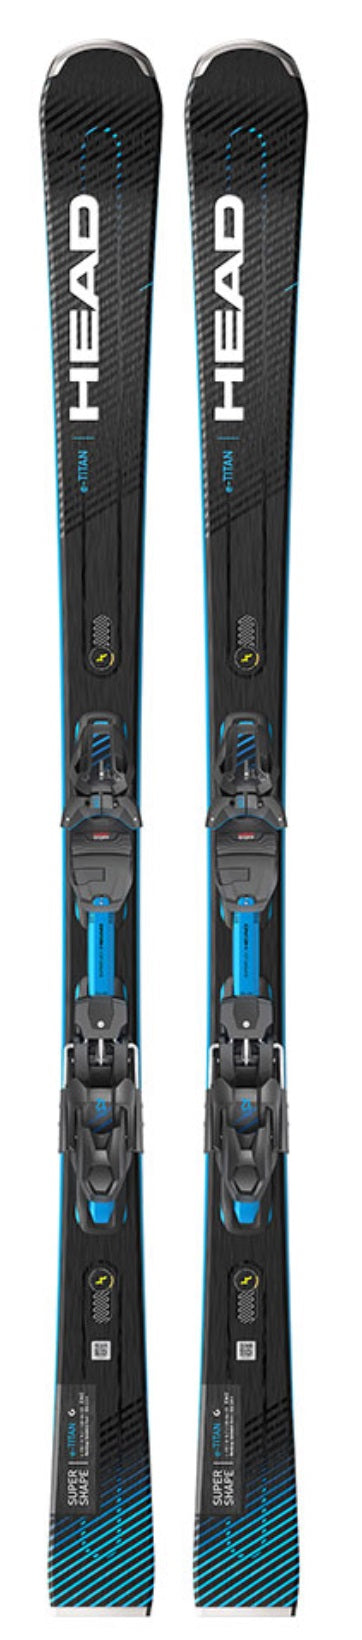 Head Supershape e-Titan Snow Skis with PRD bindings 2022